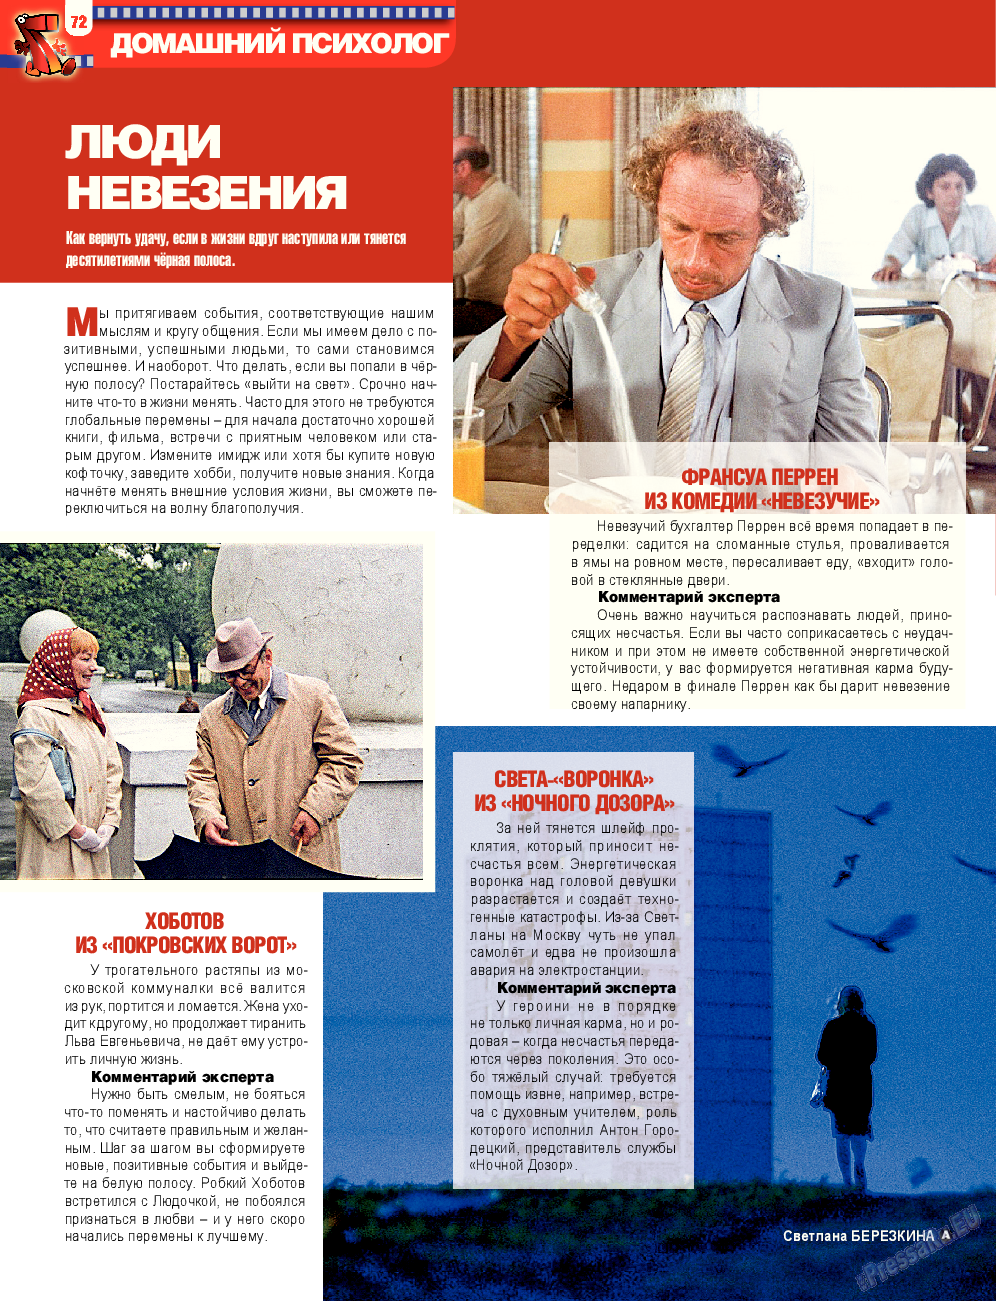 7плюс7я (журнал). 2013 год, номер 34, стр. 72